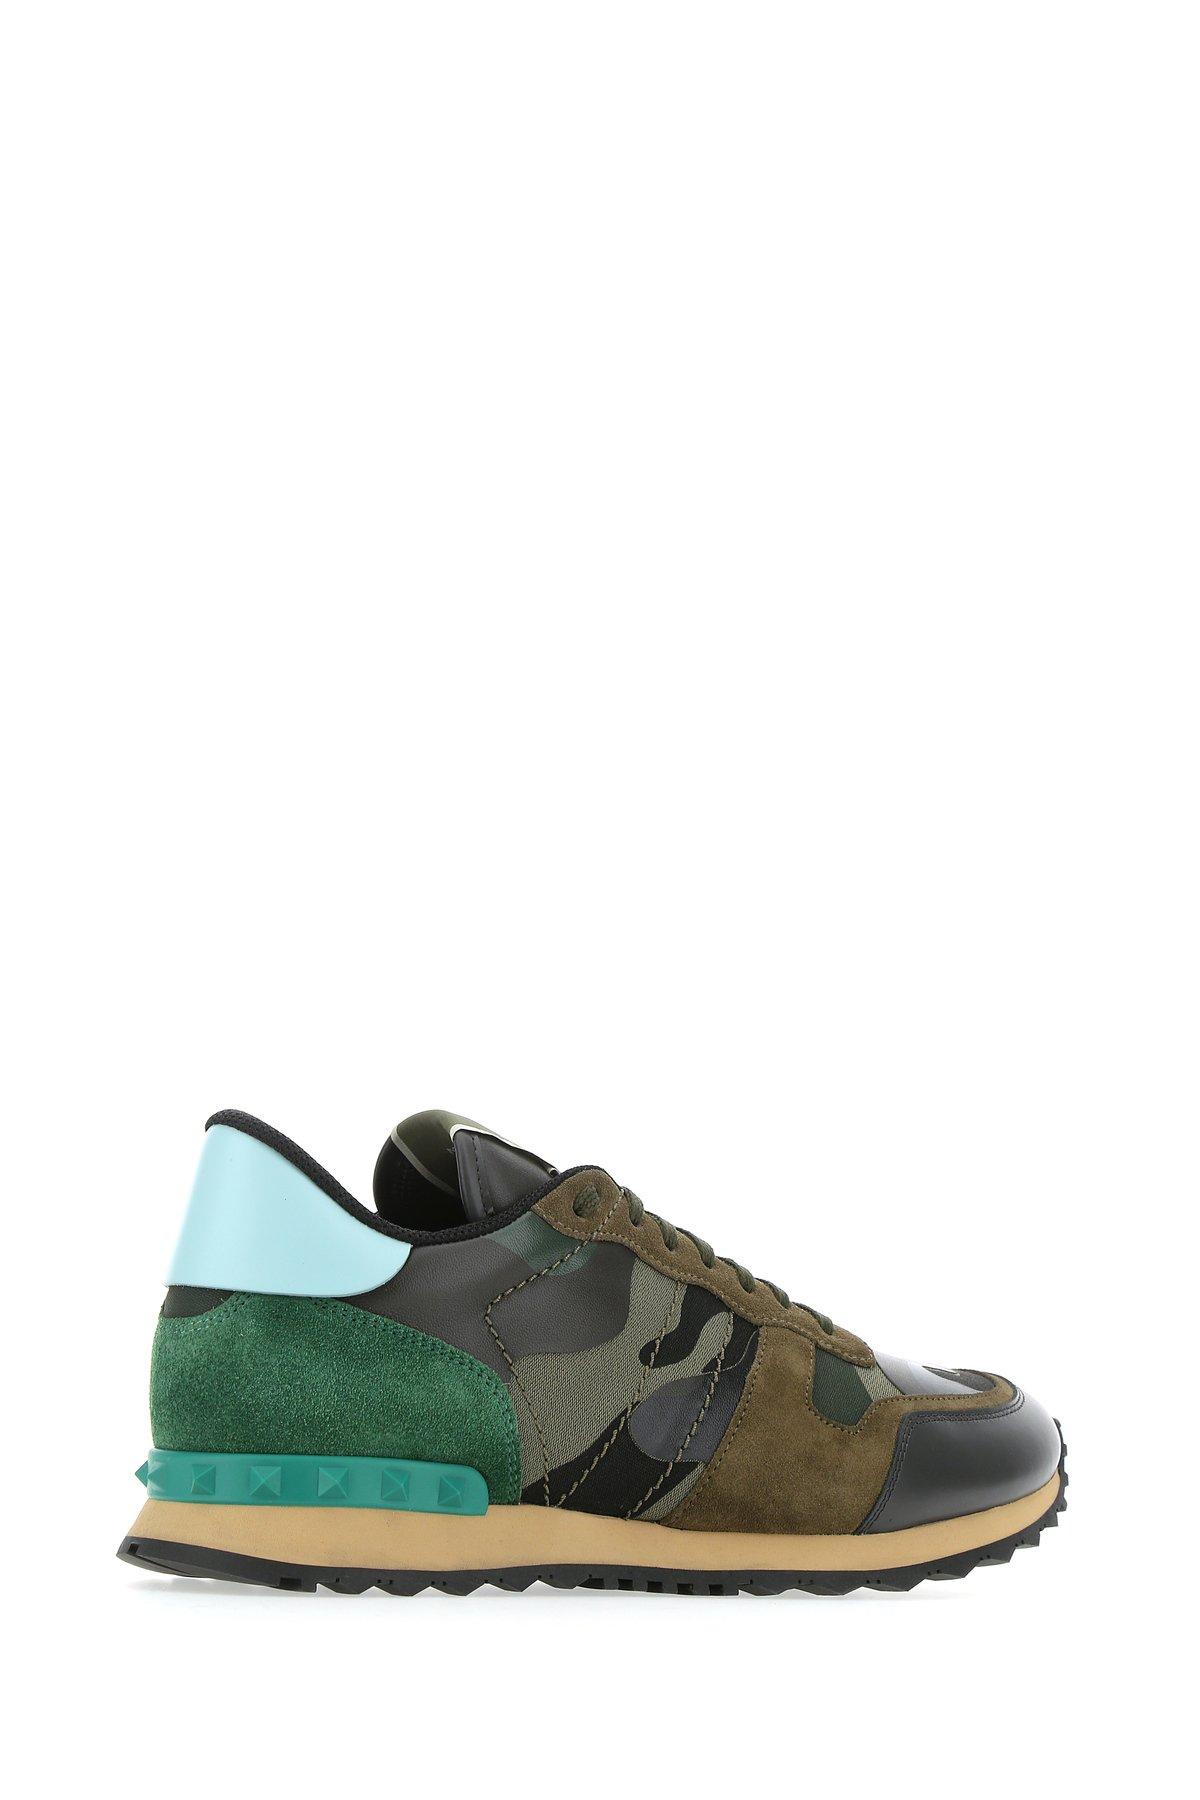 Valentino Rubber Garavani Camouflage Rockrunner Sneakers in Green for ...